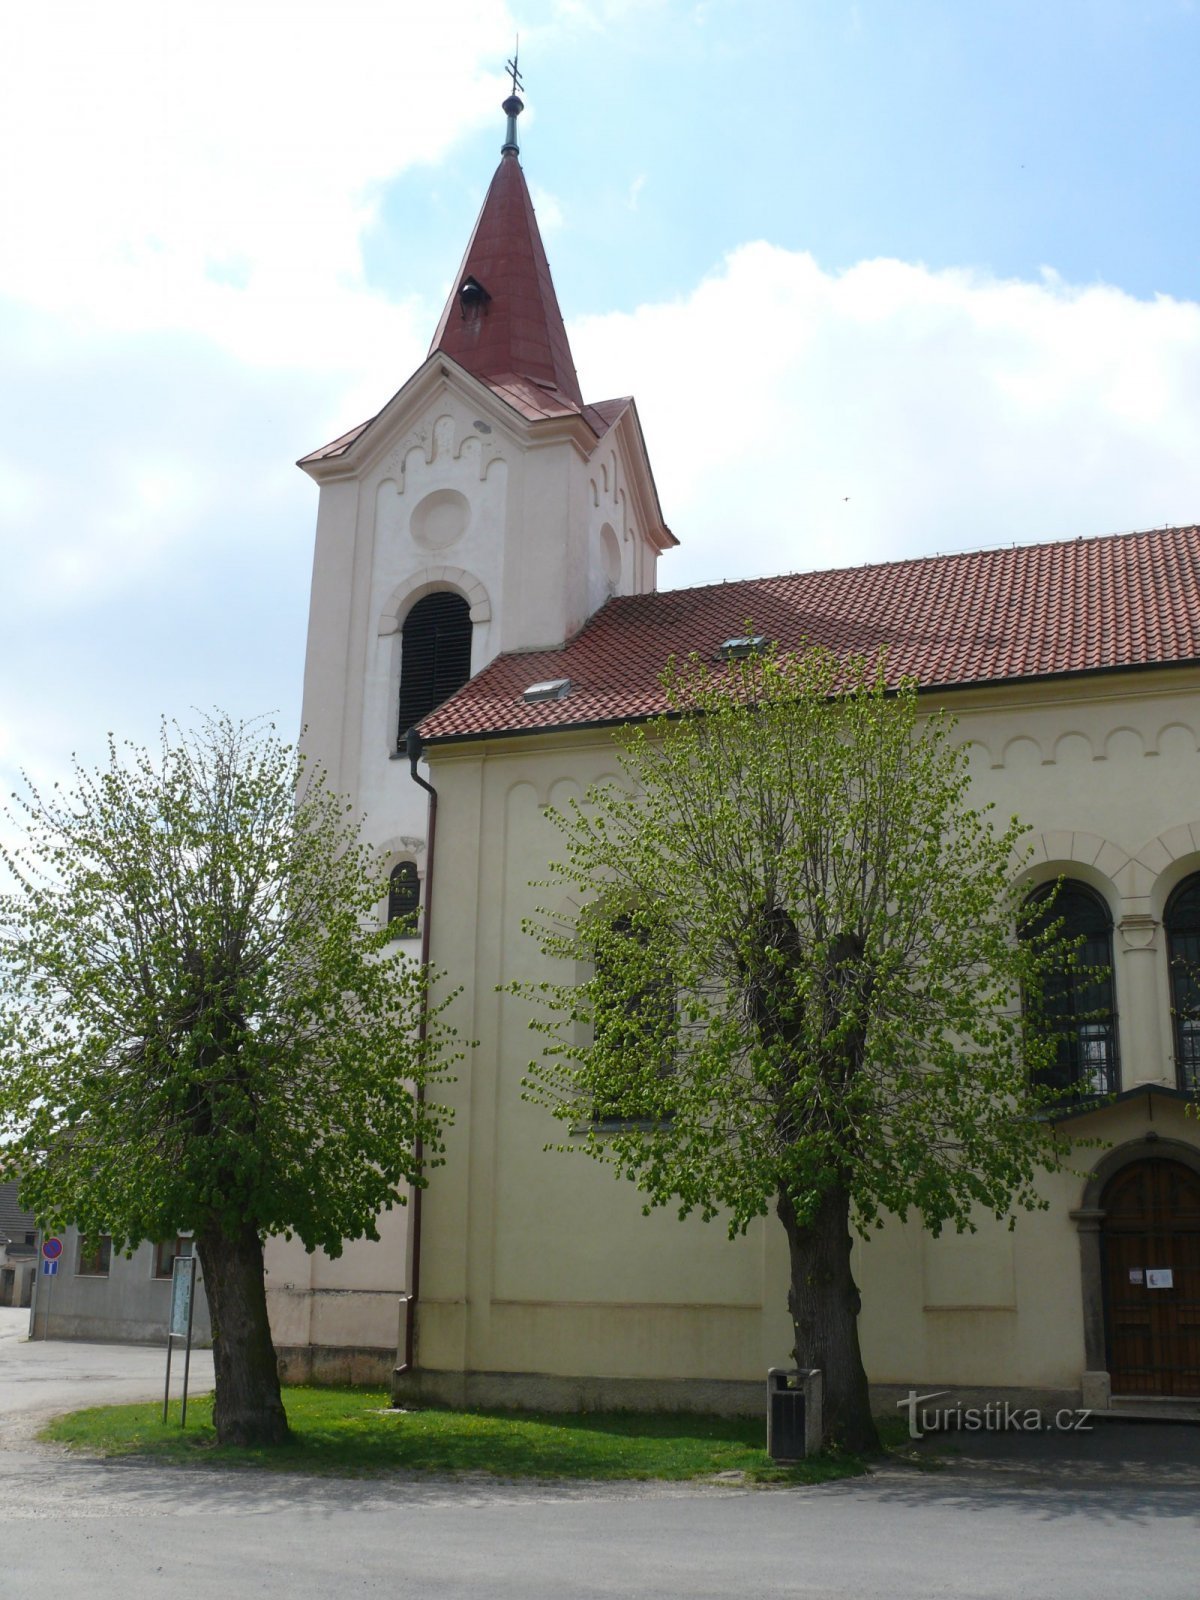 Church of St. Martin in Třebotov